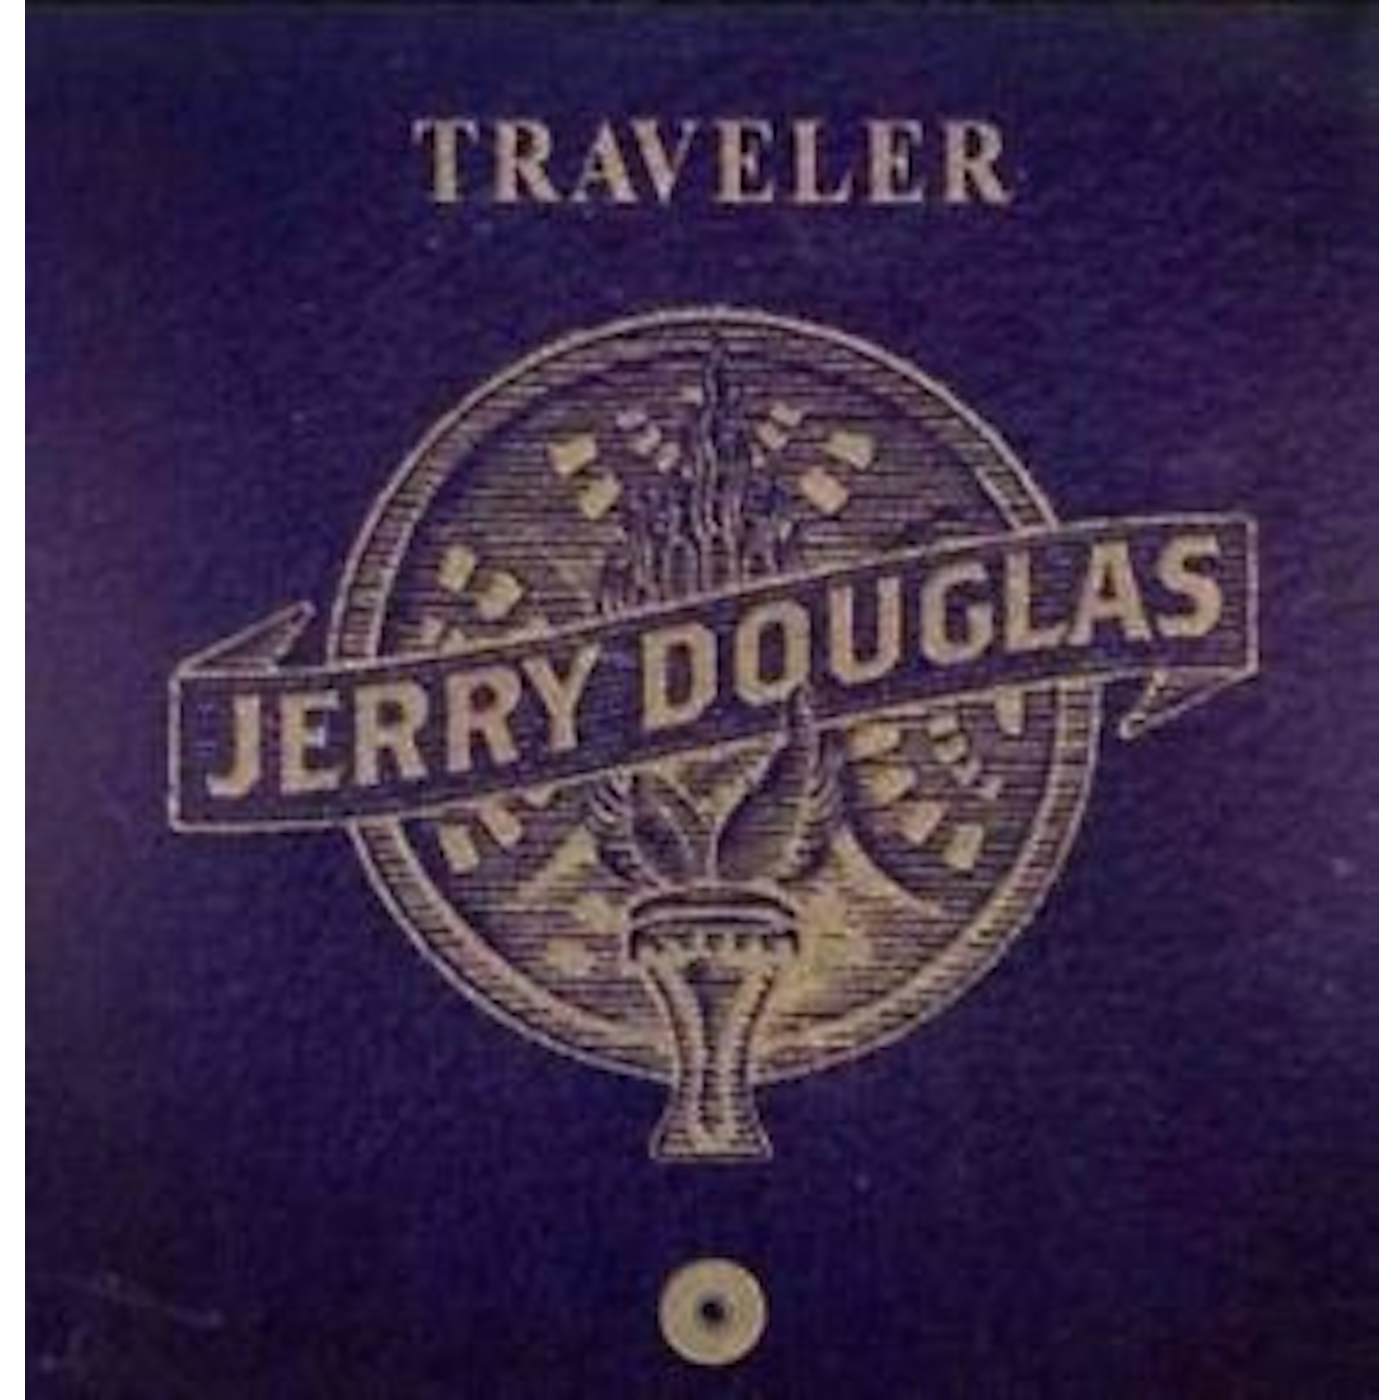 Jerry Douglas TRAVELER CD